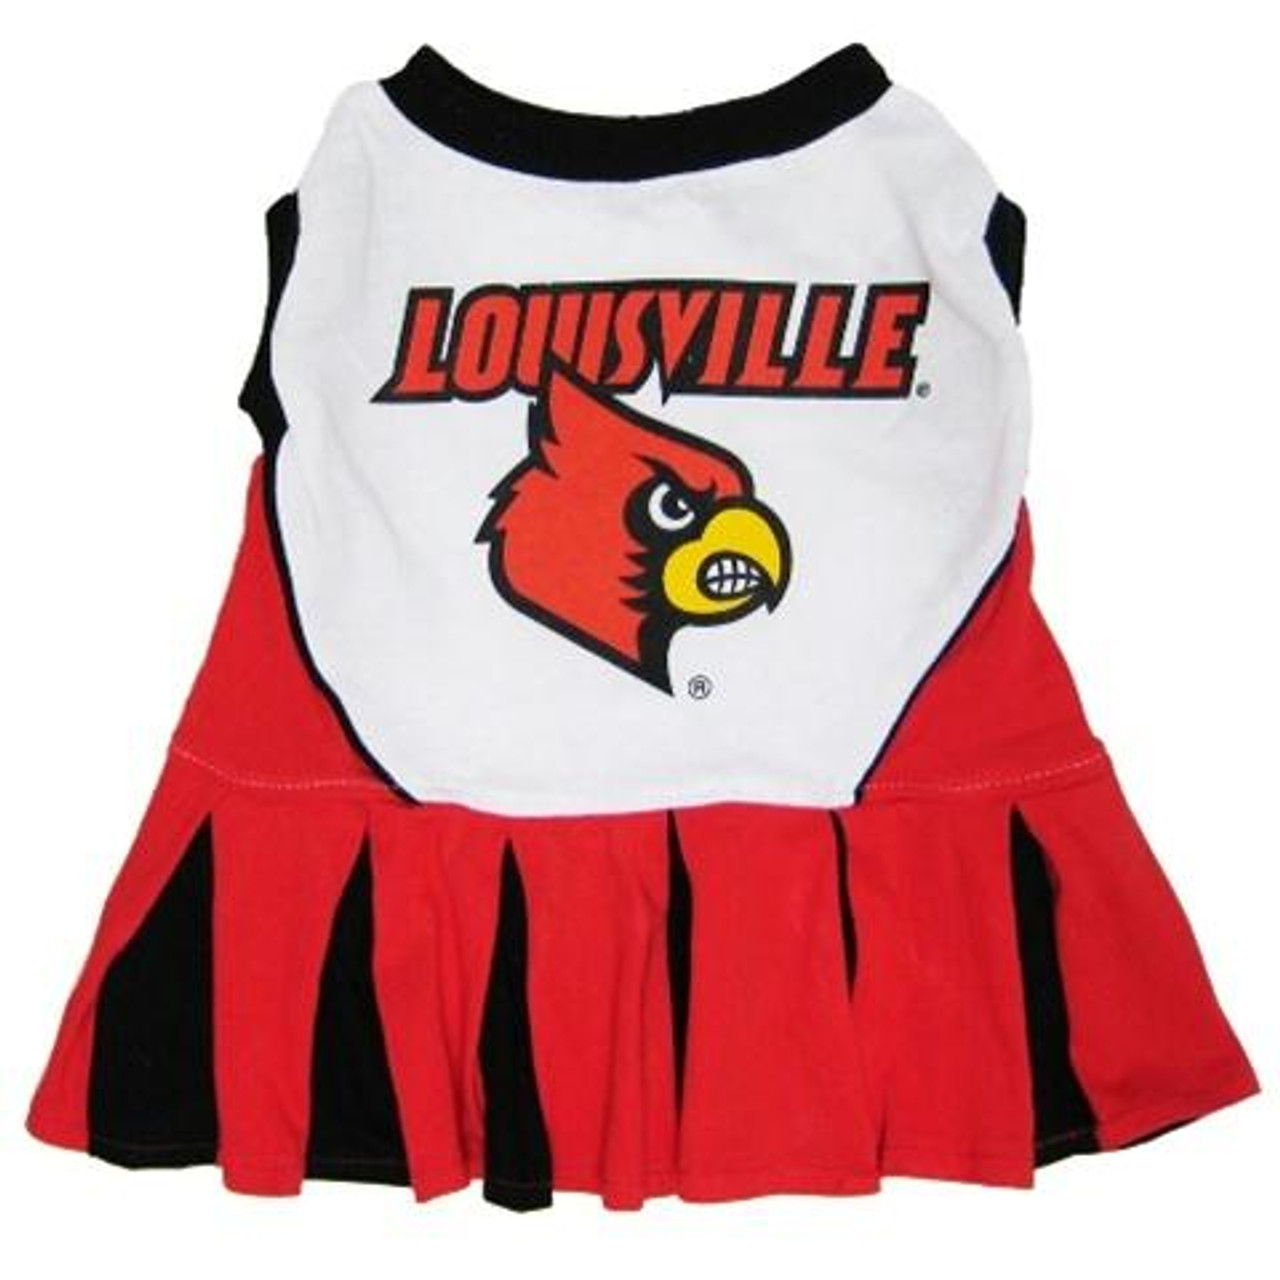 NCAA Louisville Cardinals Dog Collar, Team Color, Medium